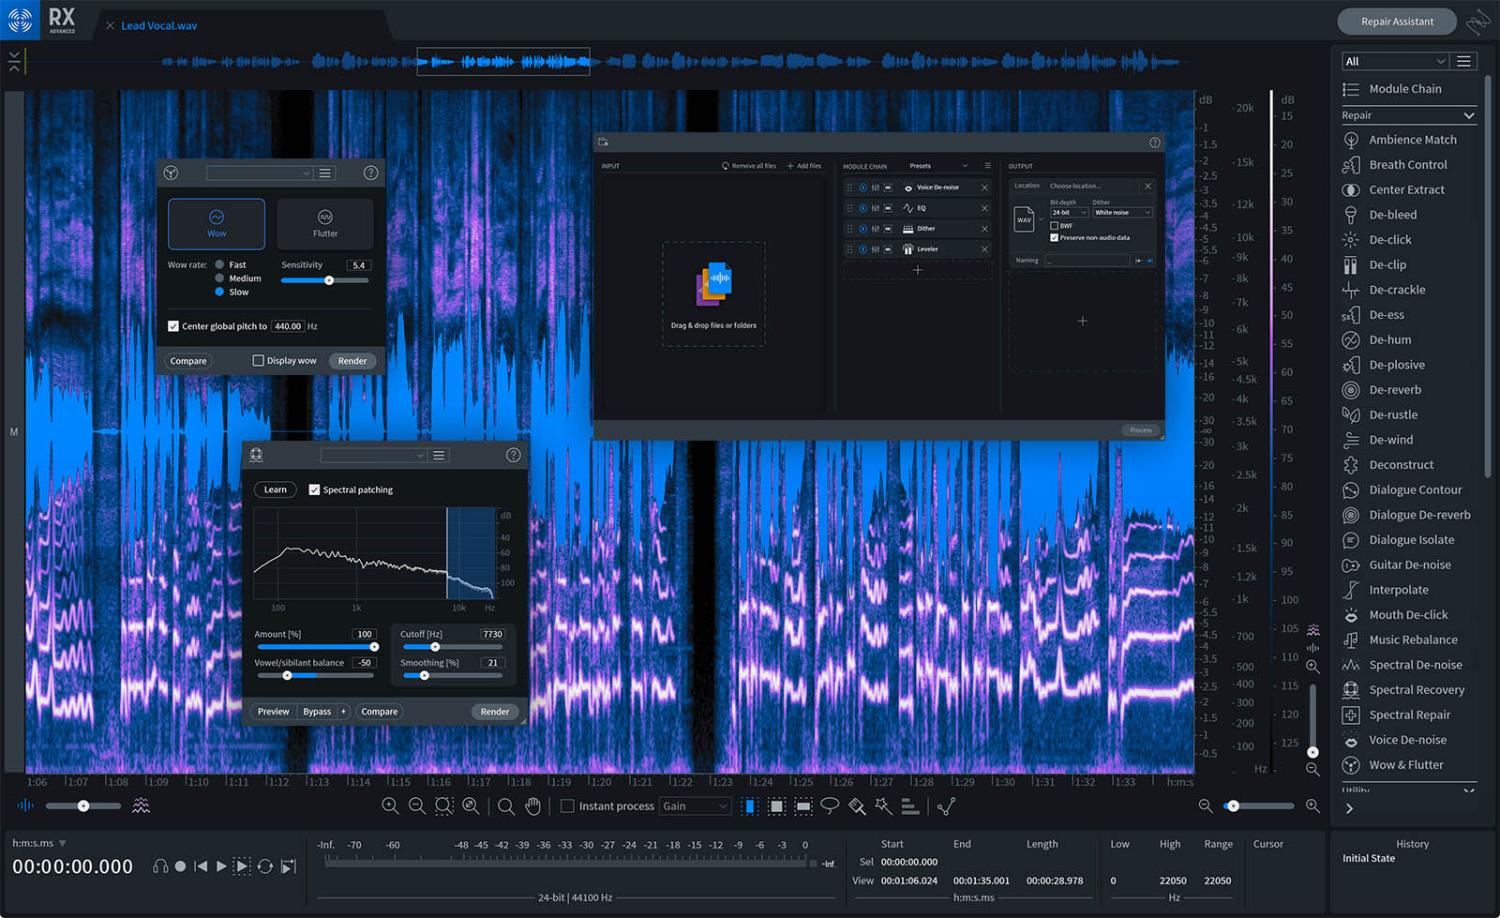 iZotope RX 10 Audio Editor Advanced 10.4.2 instal the last version for apple